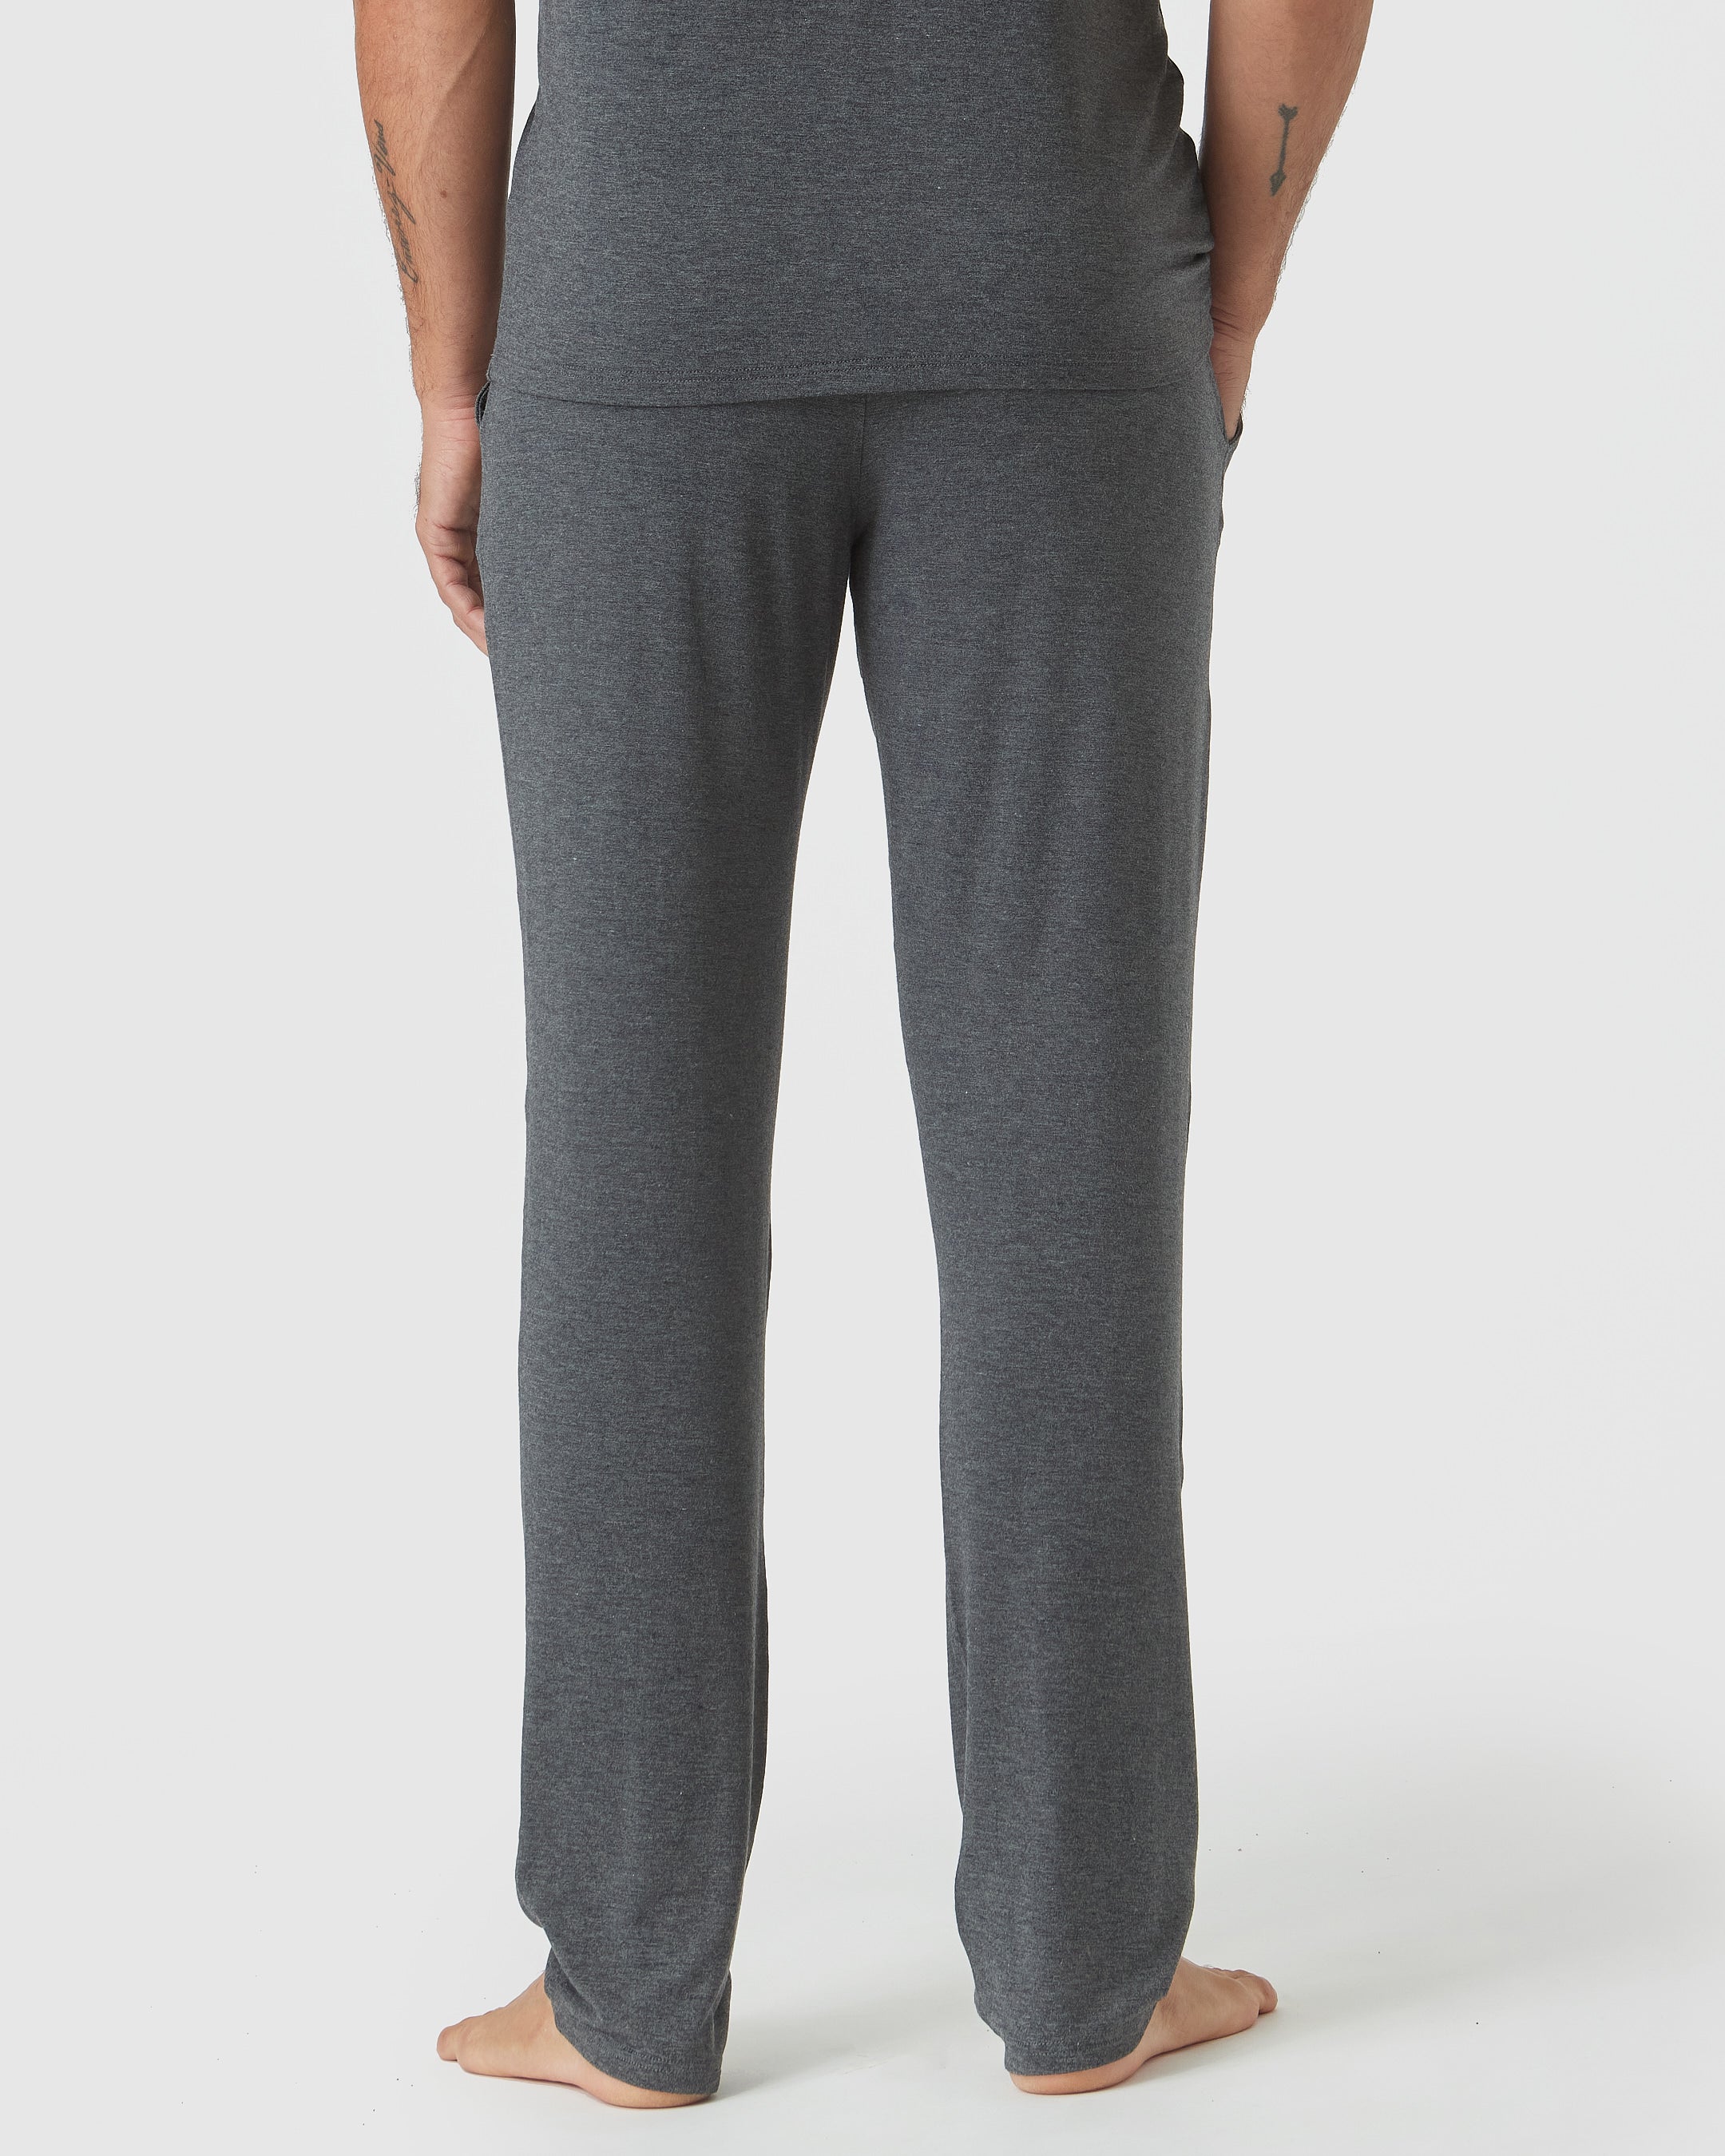 Charcoal Heather Gray Loungewear Short Sleeve Tee And Pant Set